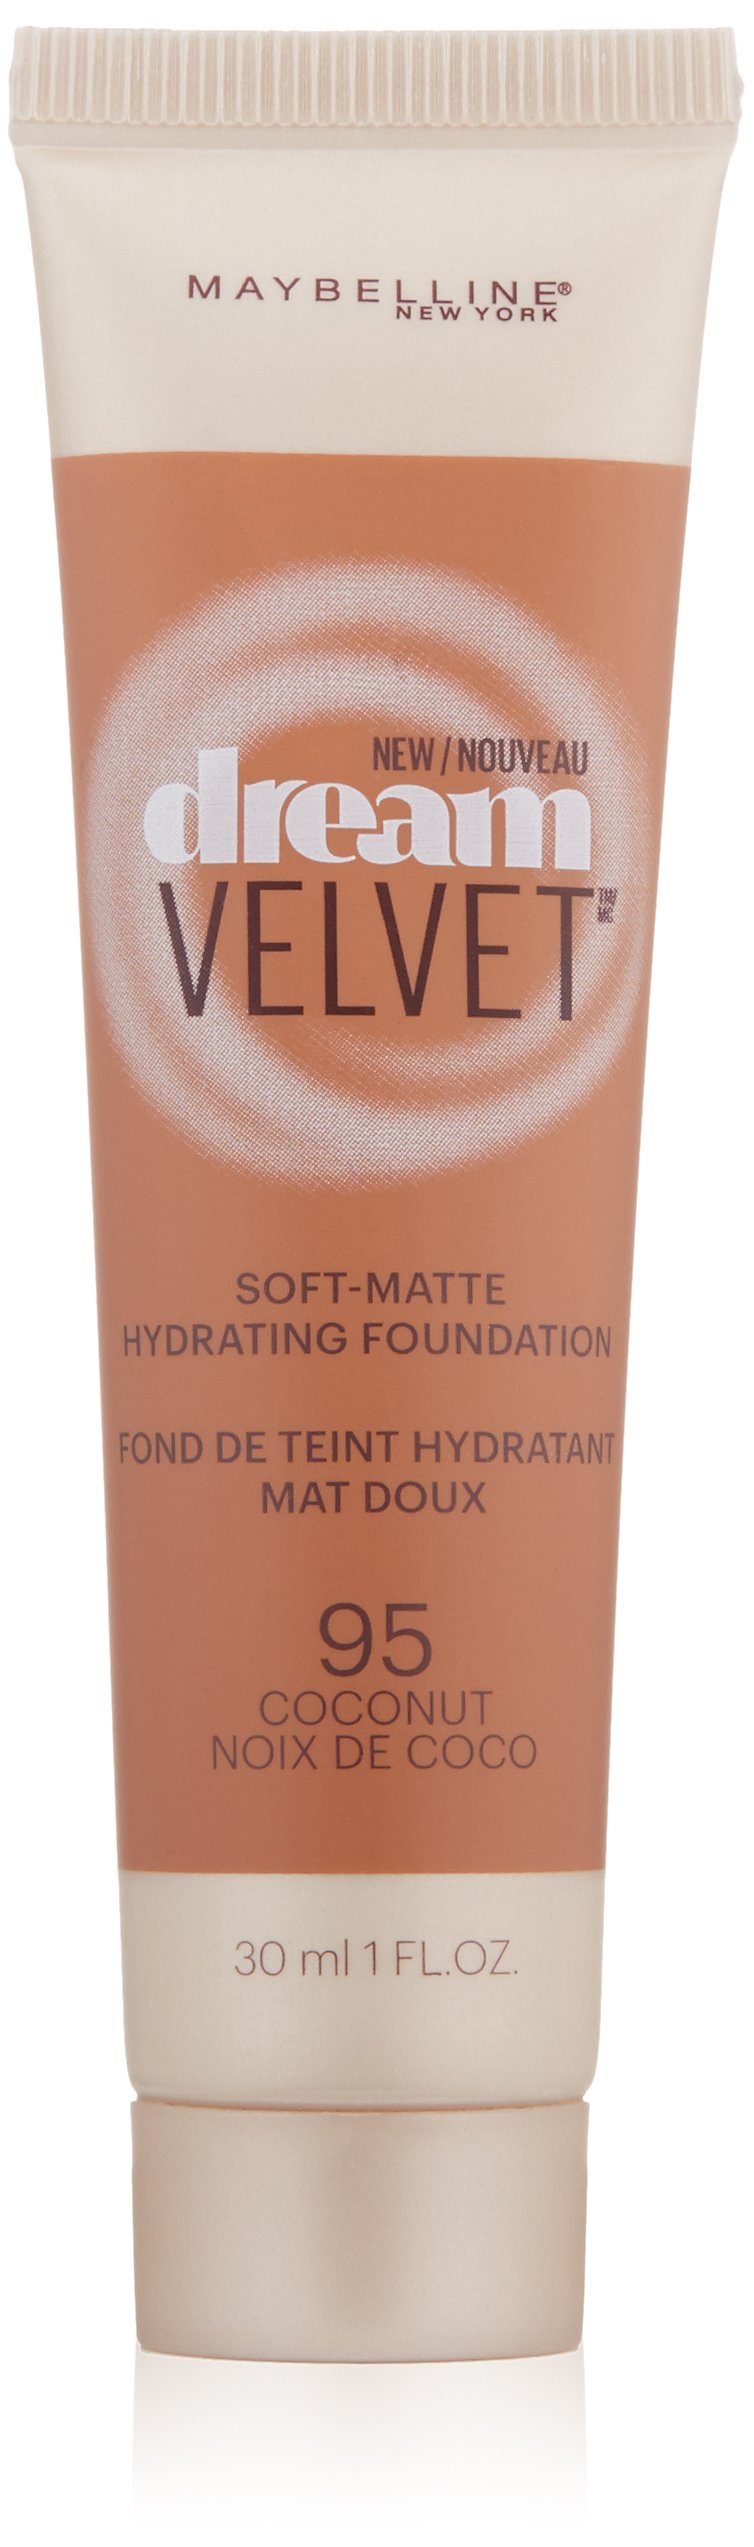 Maybelline New York Dream Velvet Soft-Matte Hydrating Foundation, Cocoa Coconut, 1 fl. oz.